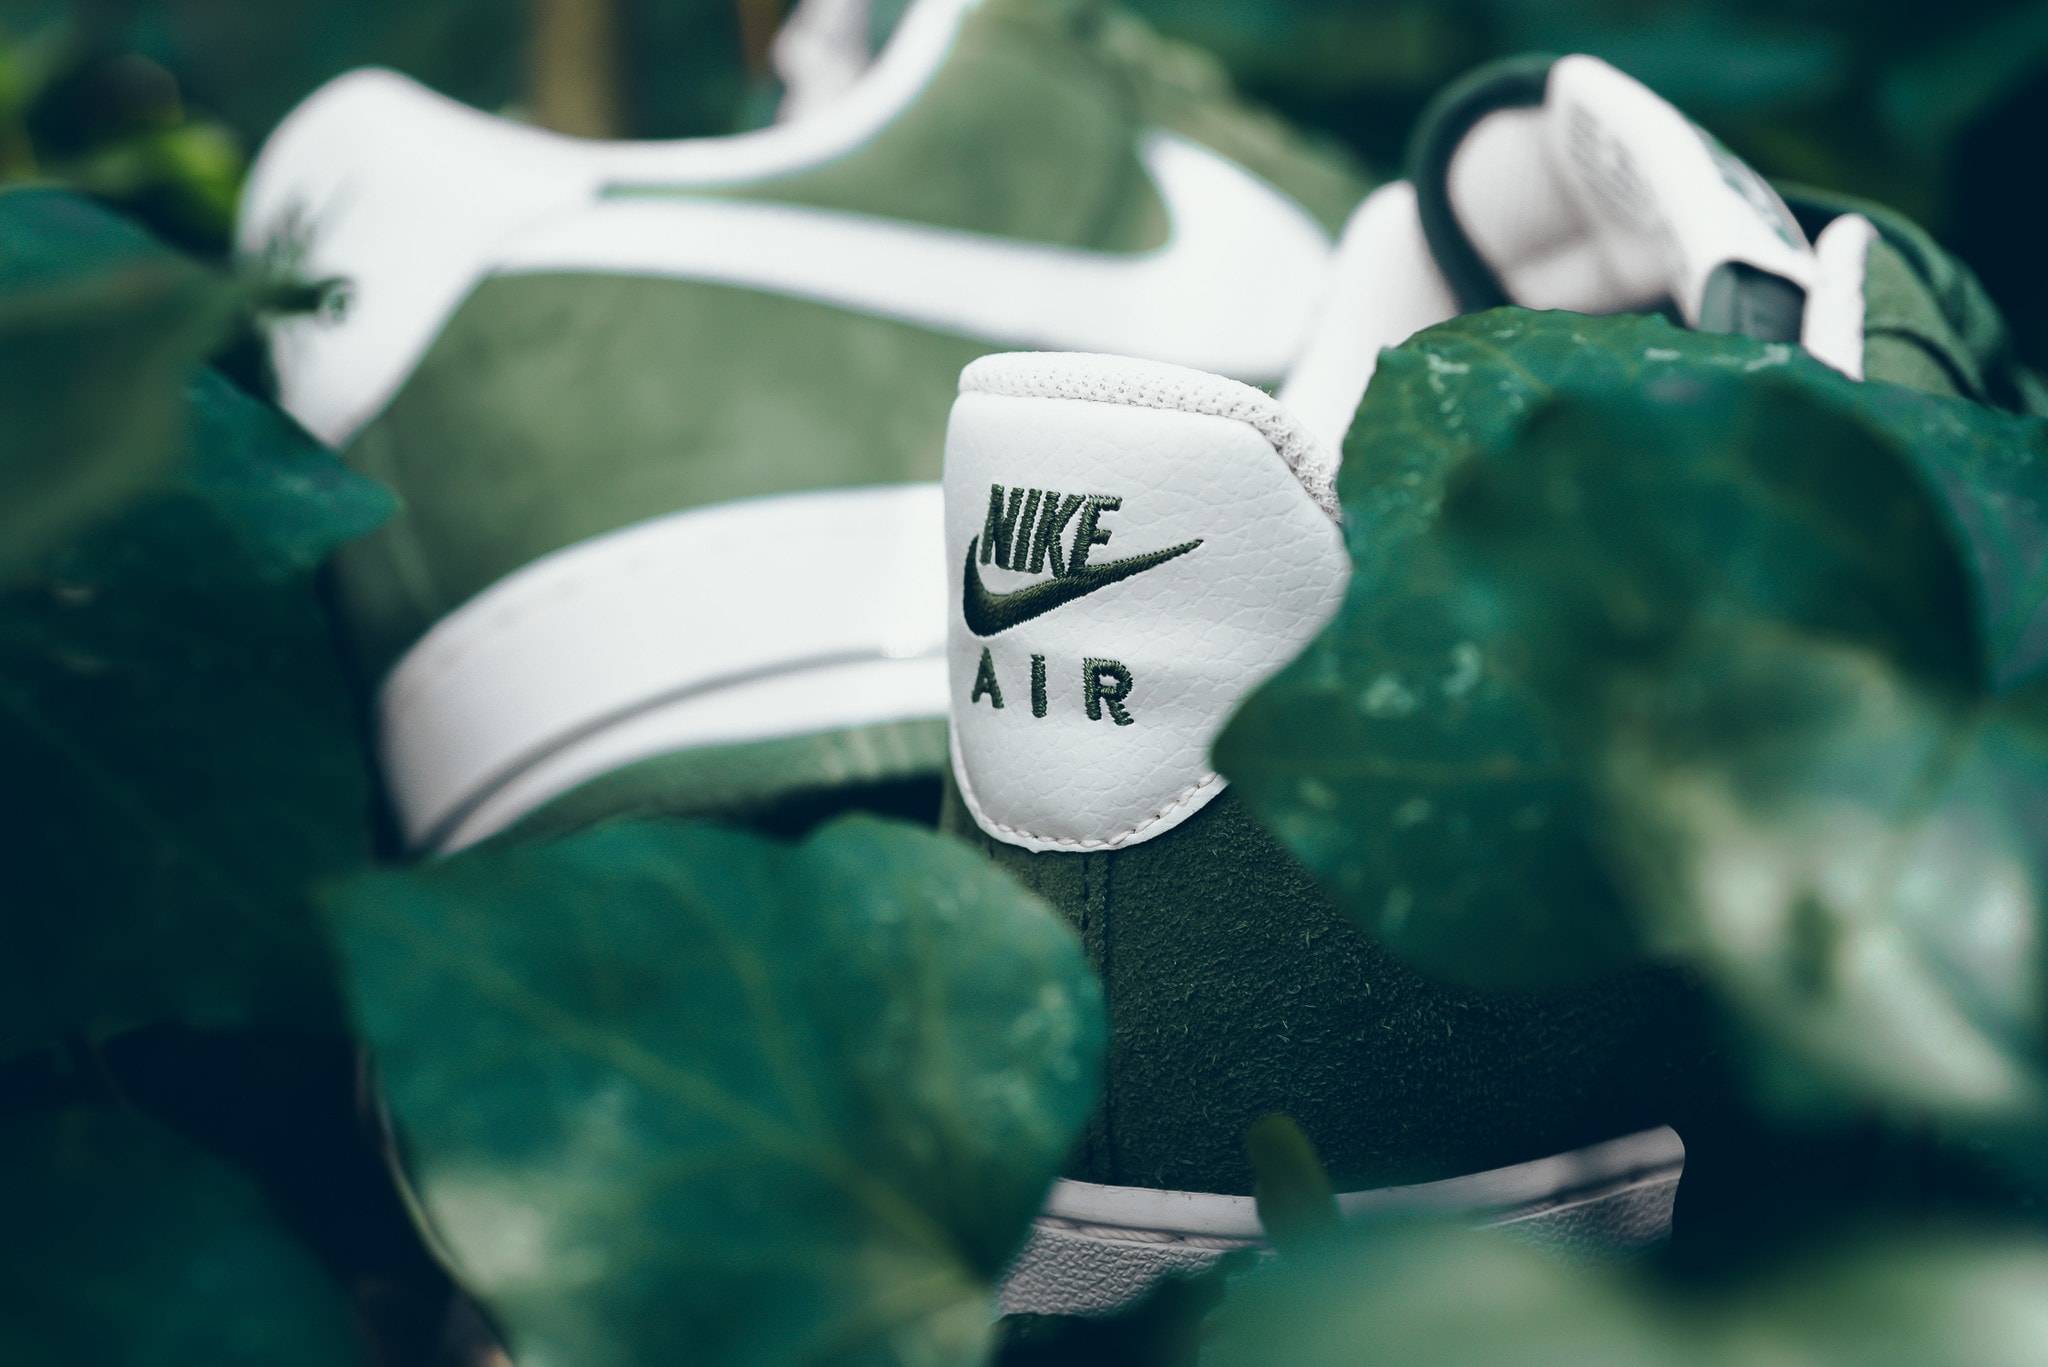 Nike Air Force 1 '07 "Palm Green"